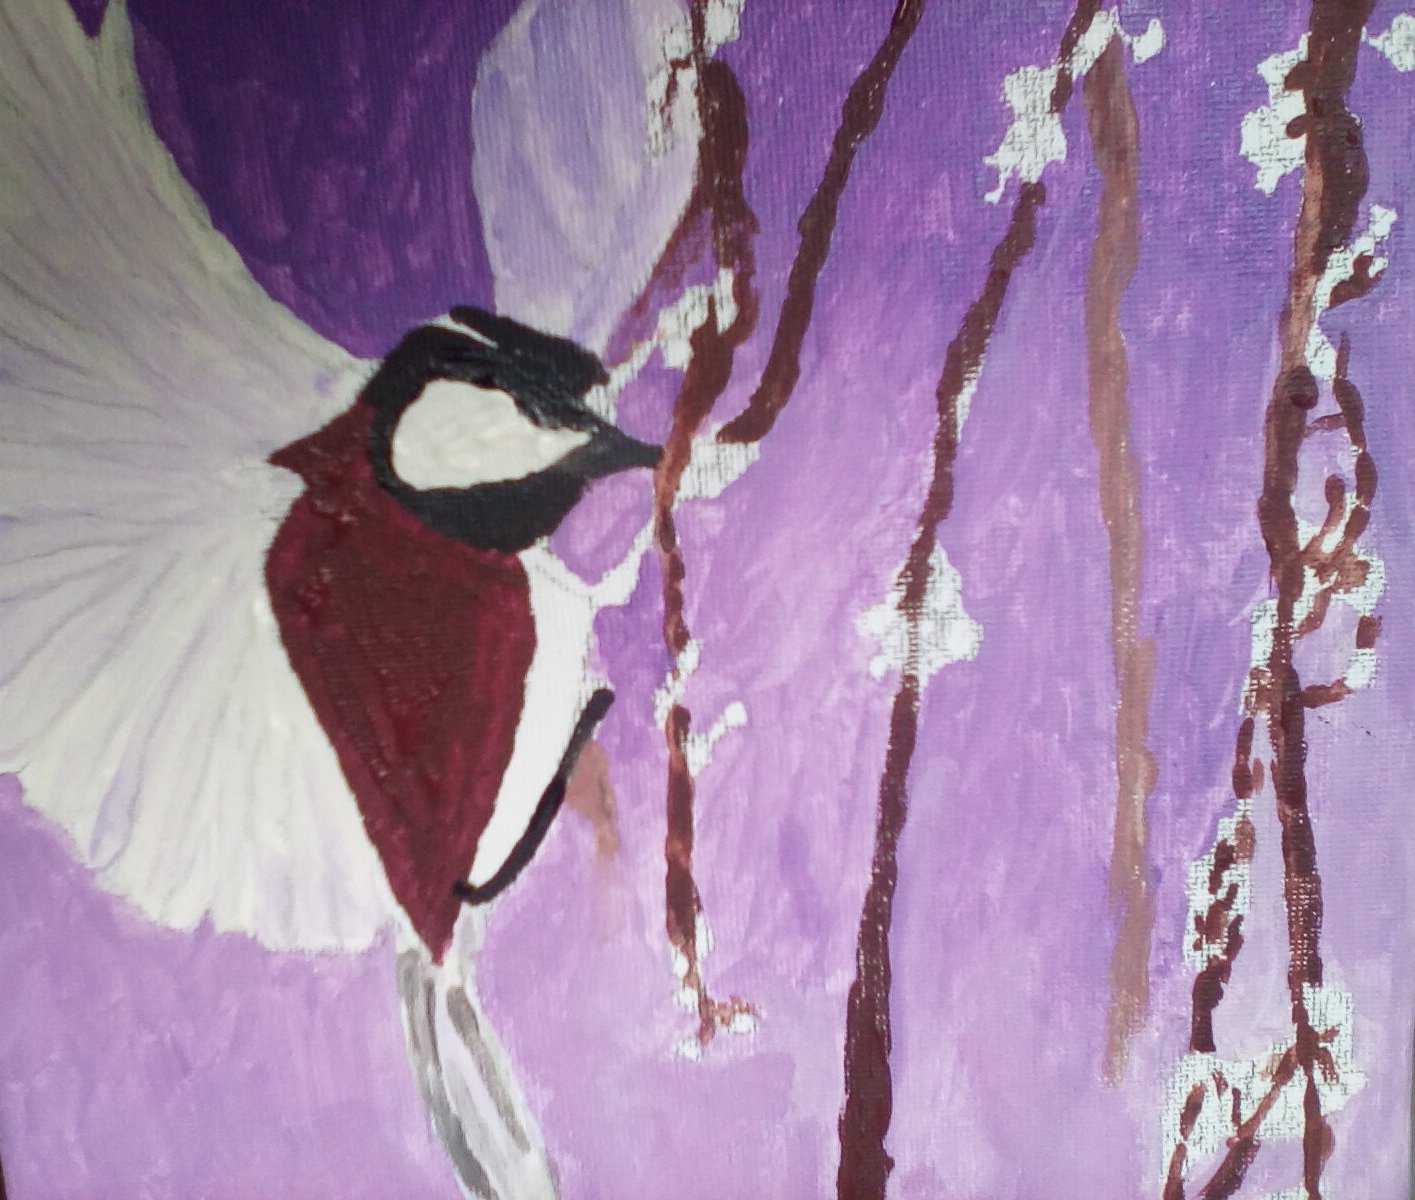 Hummingbird painting - Work in progress.